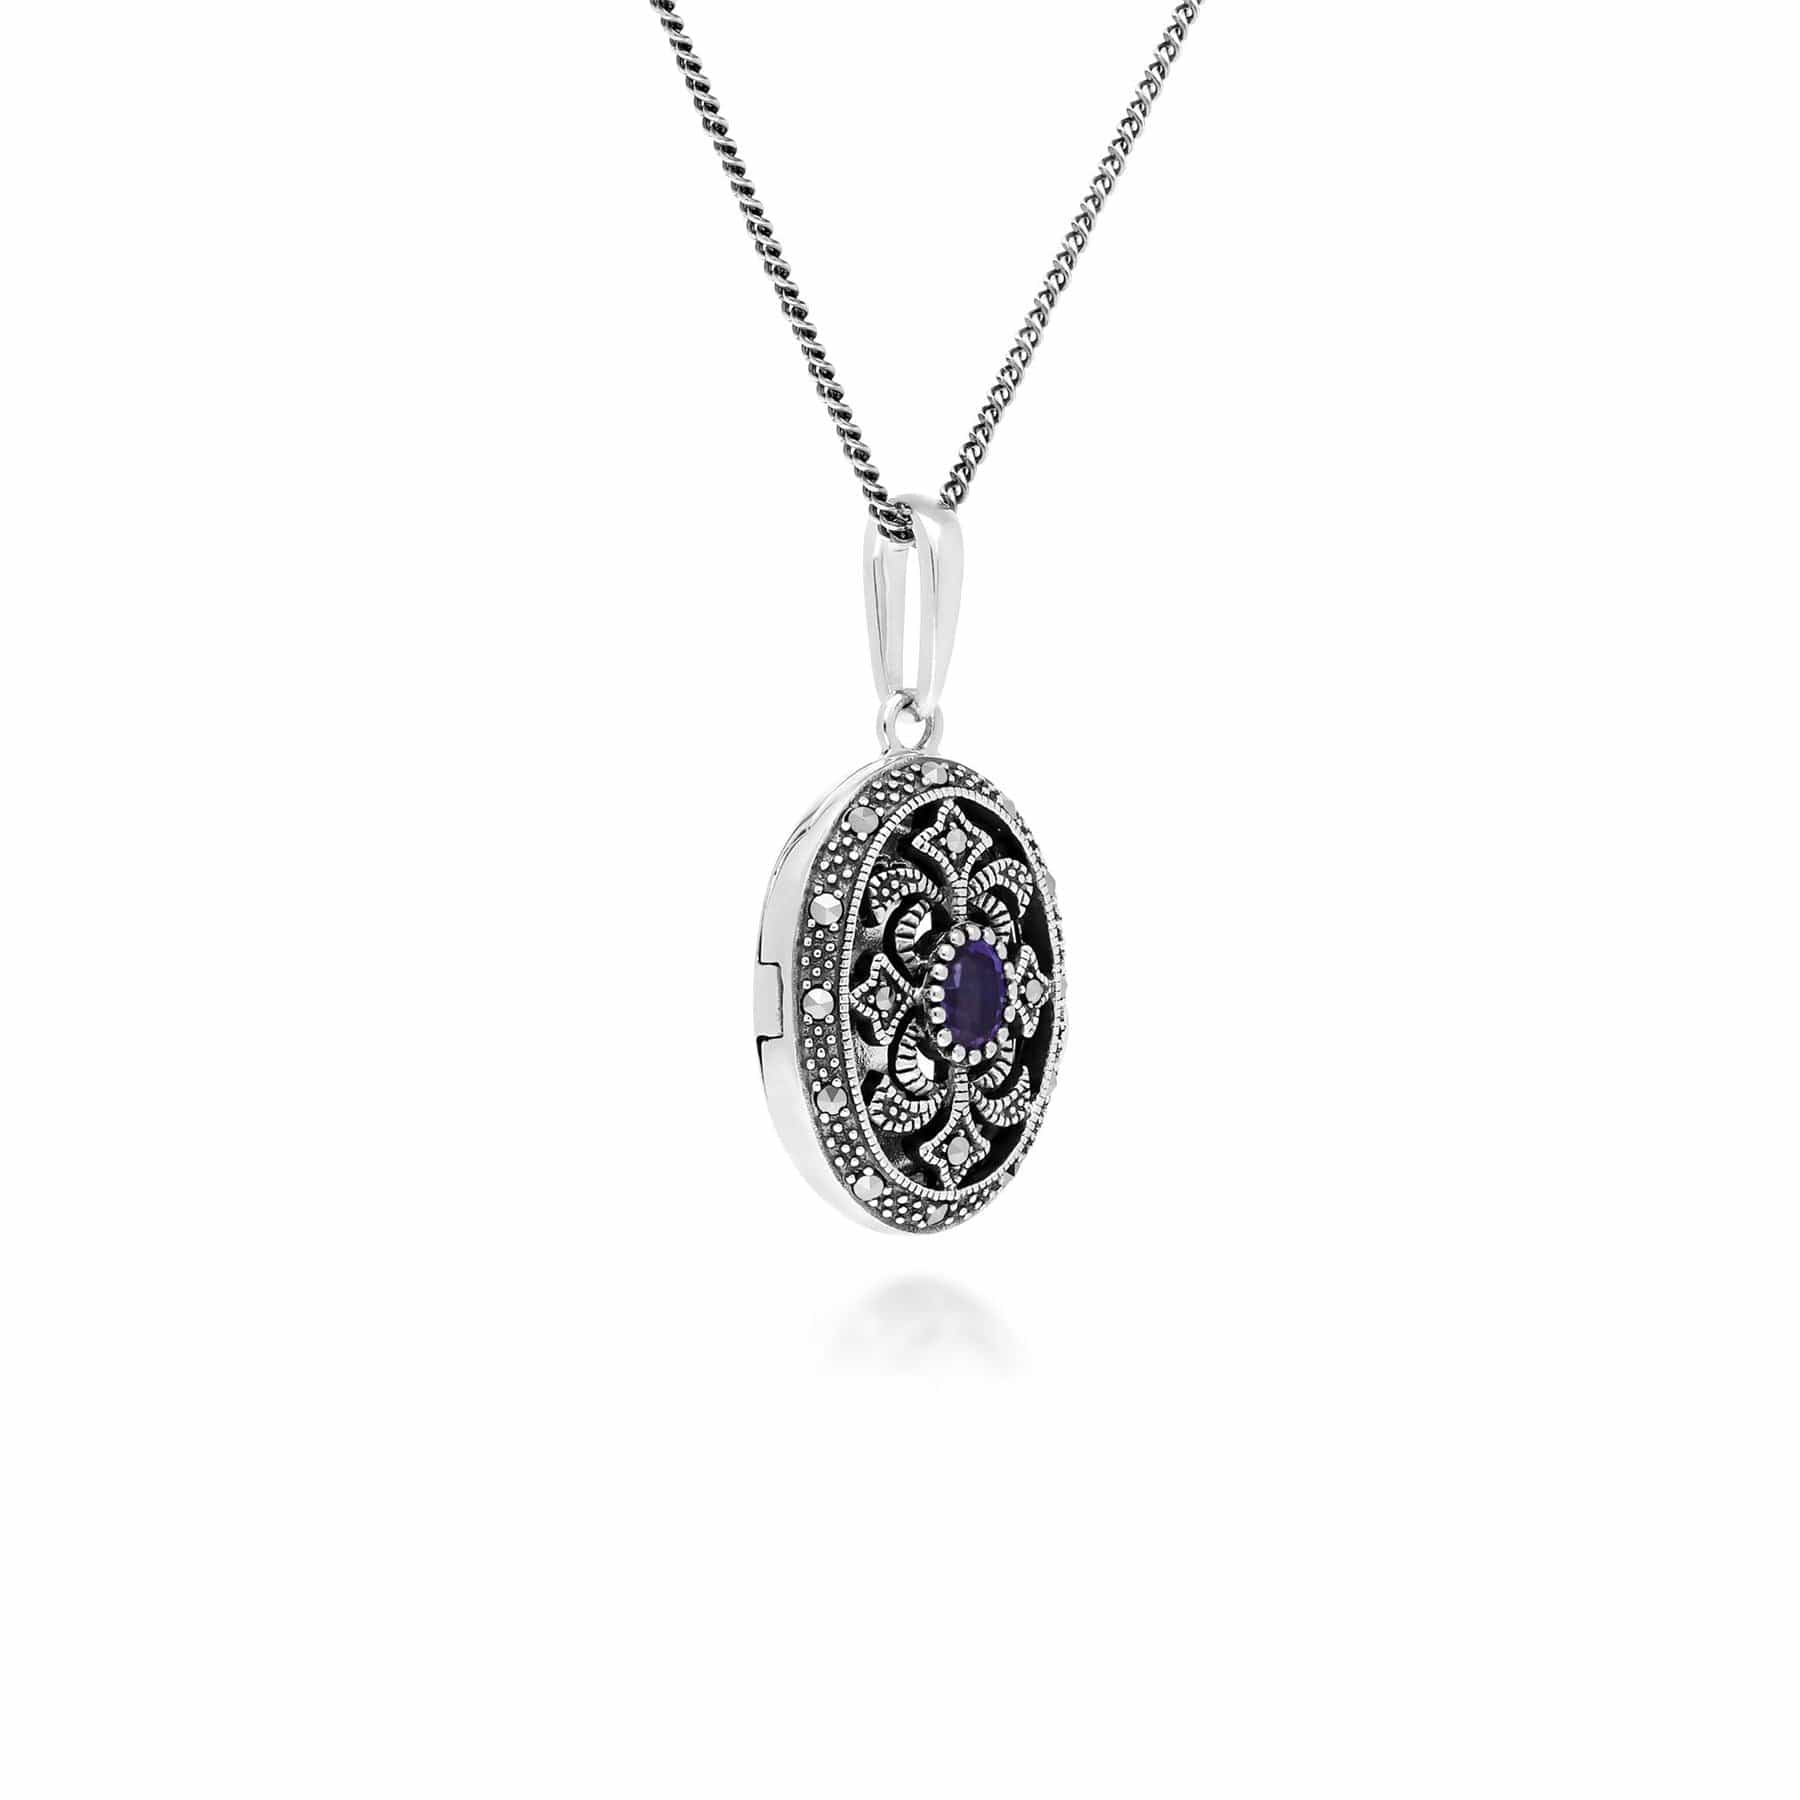 214N716205925 Art Nouveau Style Oval Amethyst & Marcasite Locket Necklace in 925 Sterling Silver 2